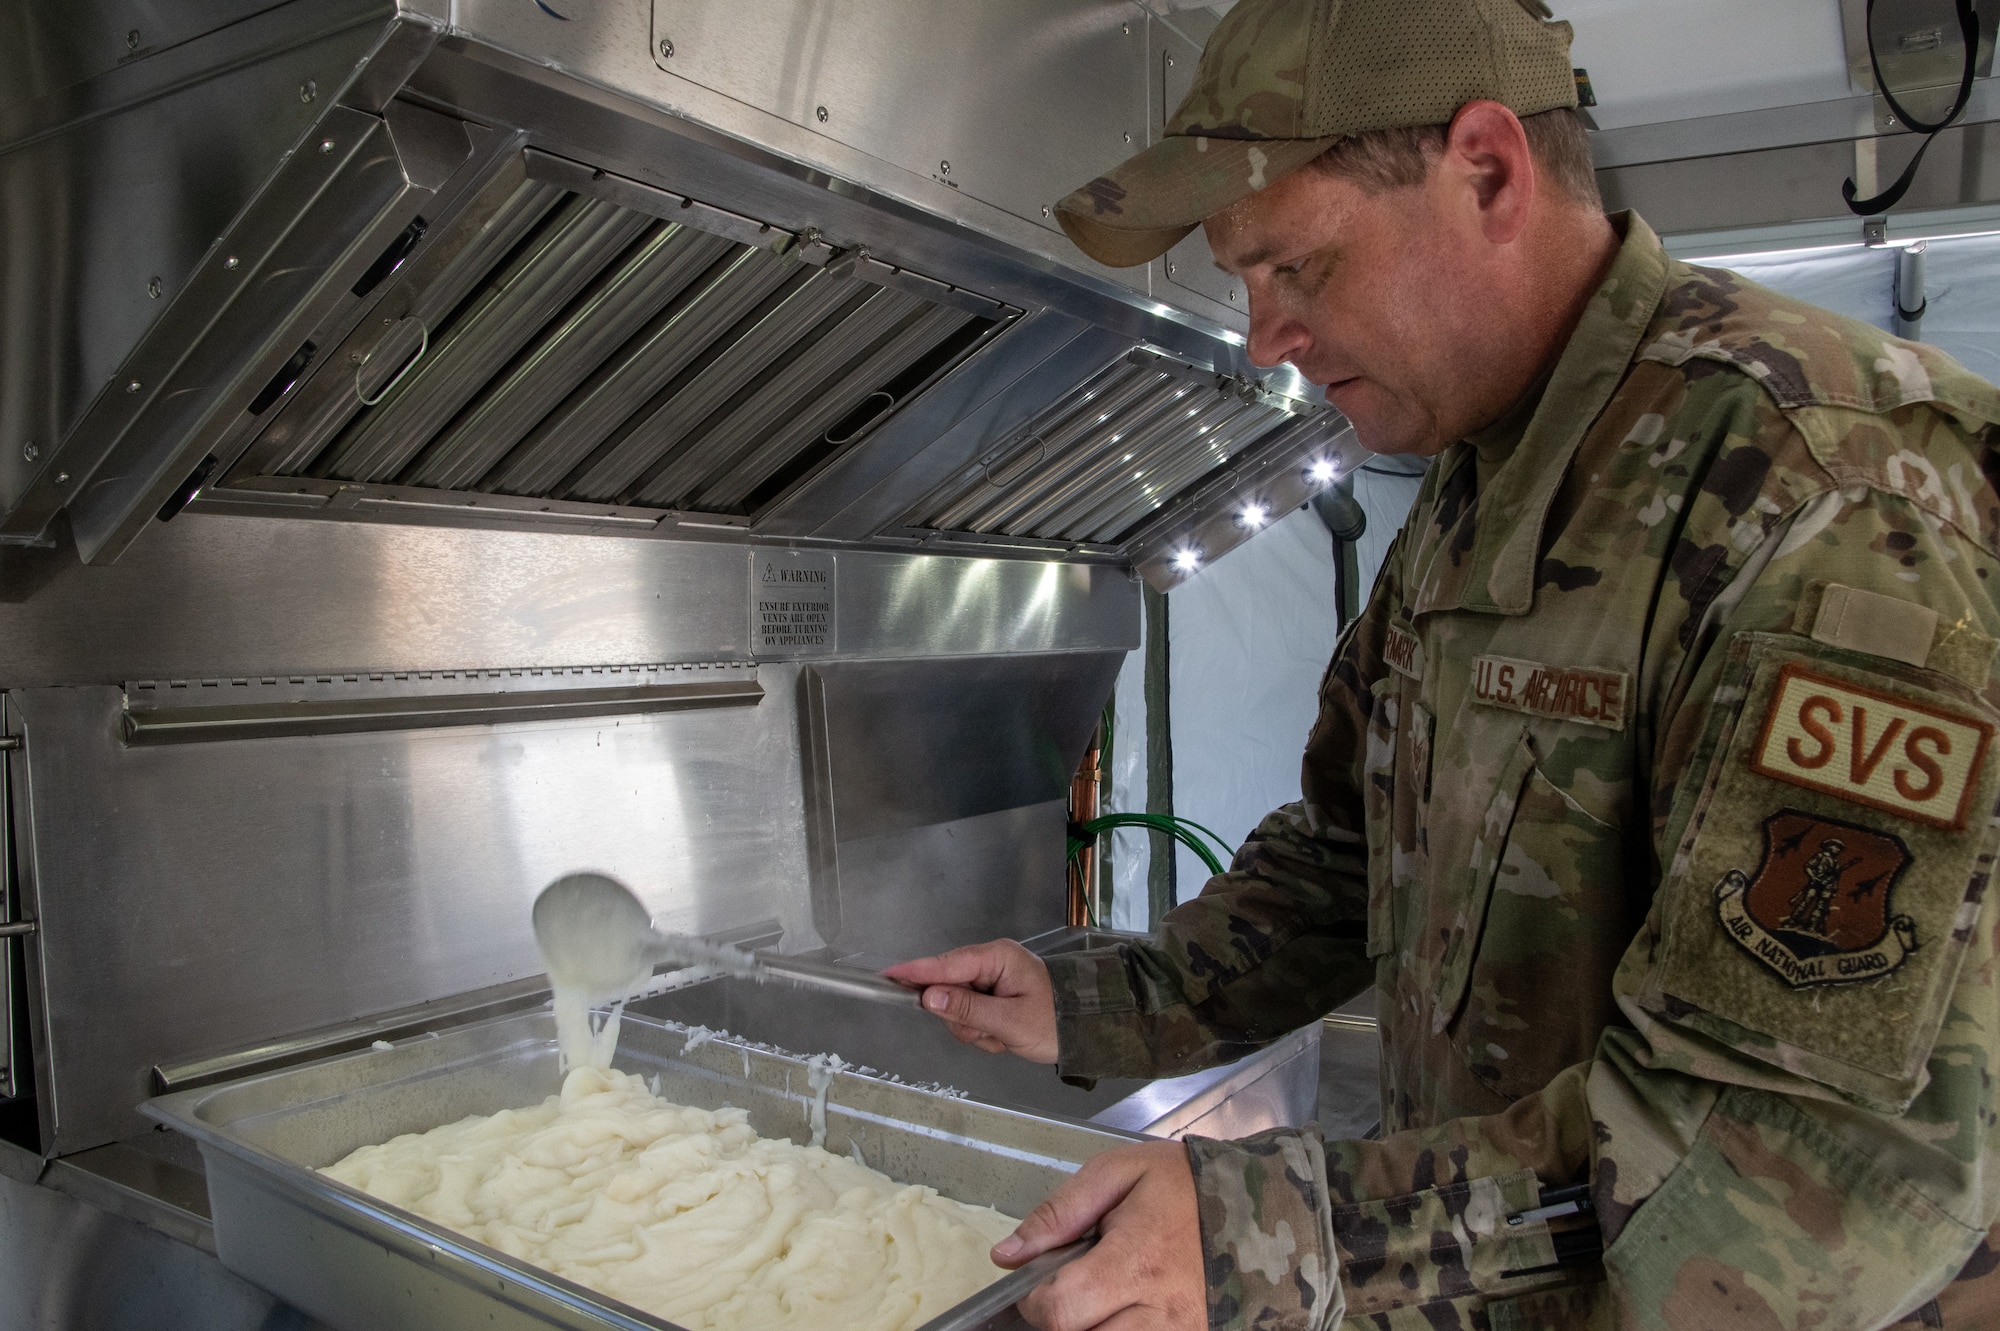 Air National Guard Airman prepares food inside the ESPEK kitchen wearing OCP patterned uniform.